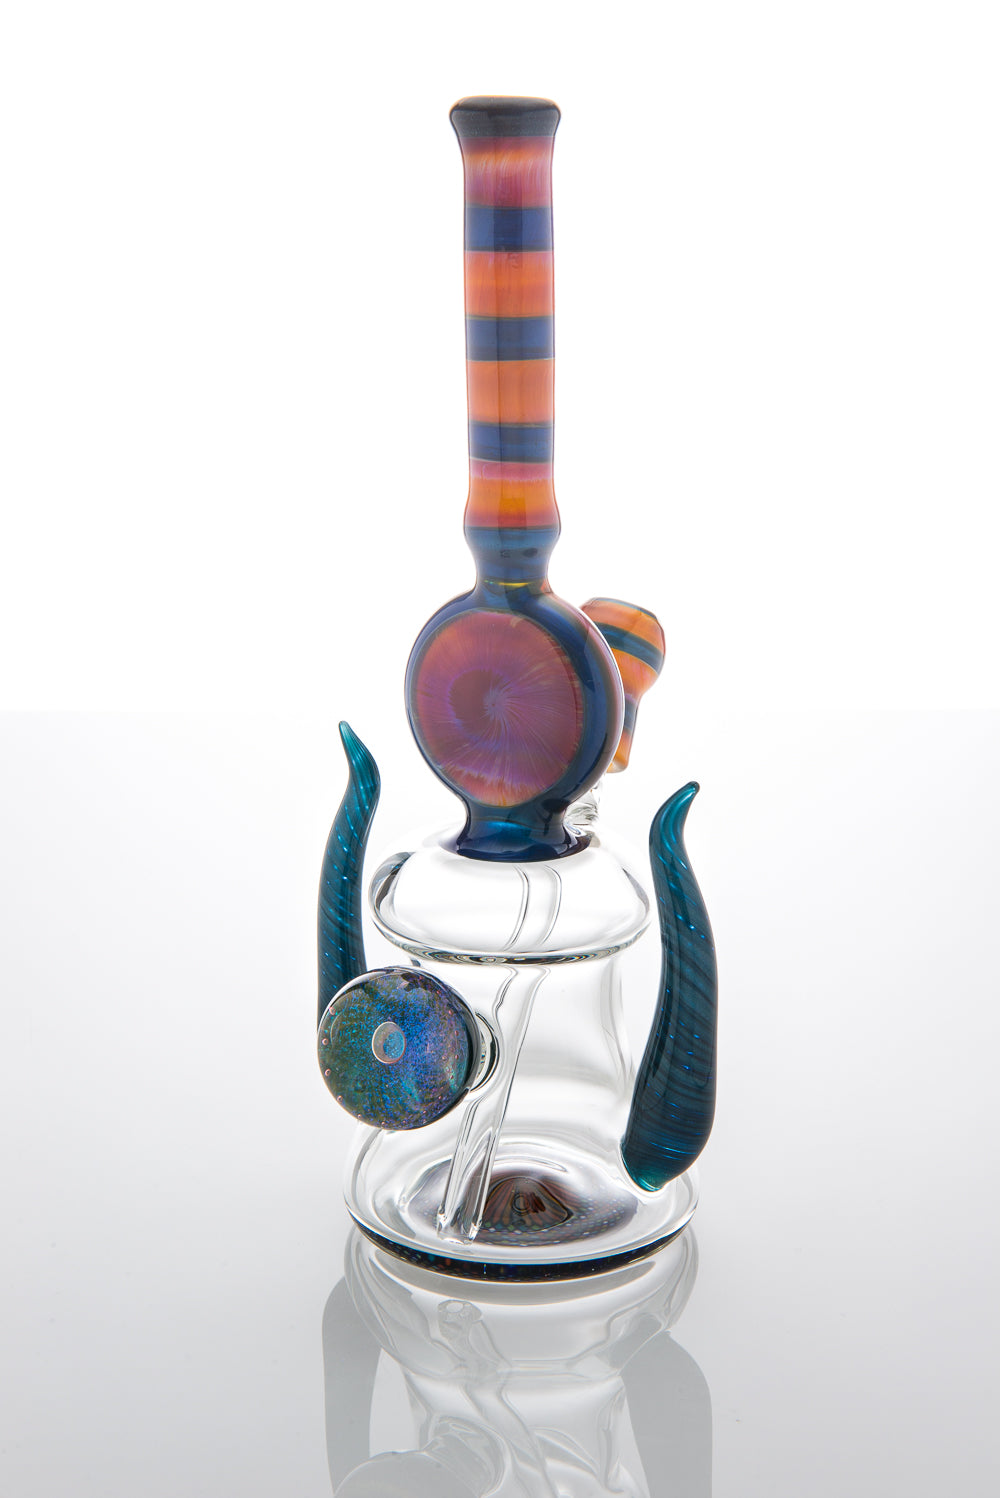 Filla Flip Bubbler with Horns Collaboration by E-Box and Adam Reetz